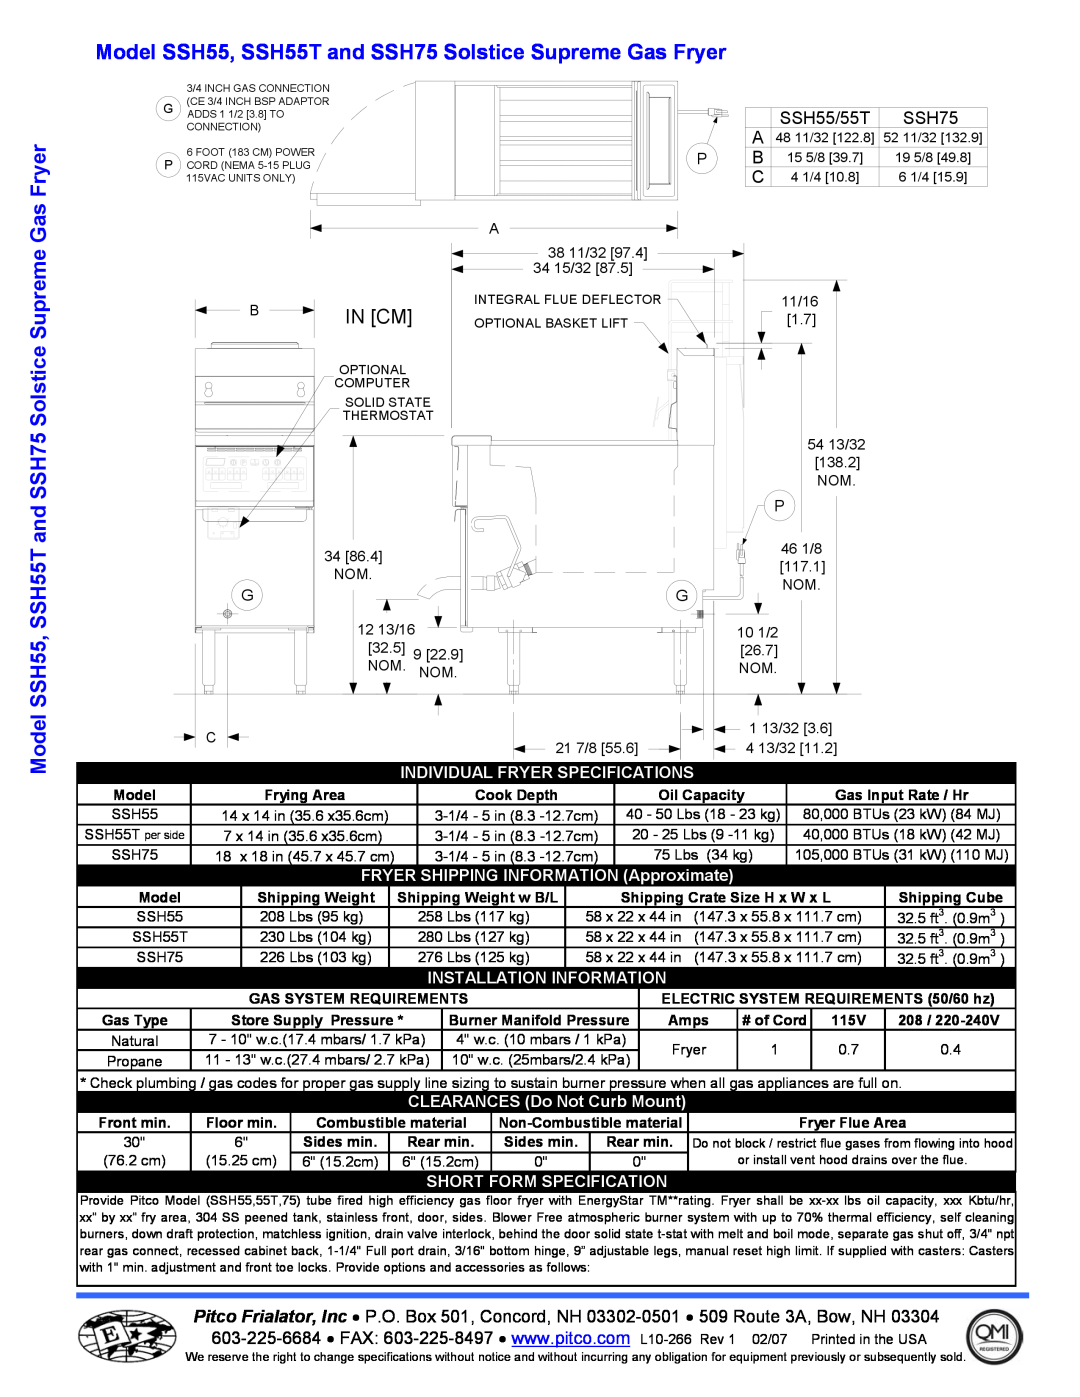 Pitco Frialator manual Model SSH55, SSH55T and SSH75 Solstice Supreme Gas Fryer, In Cm, SSH55/55T SSH75, Short 